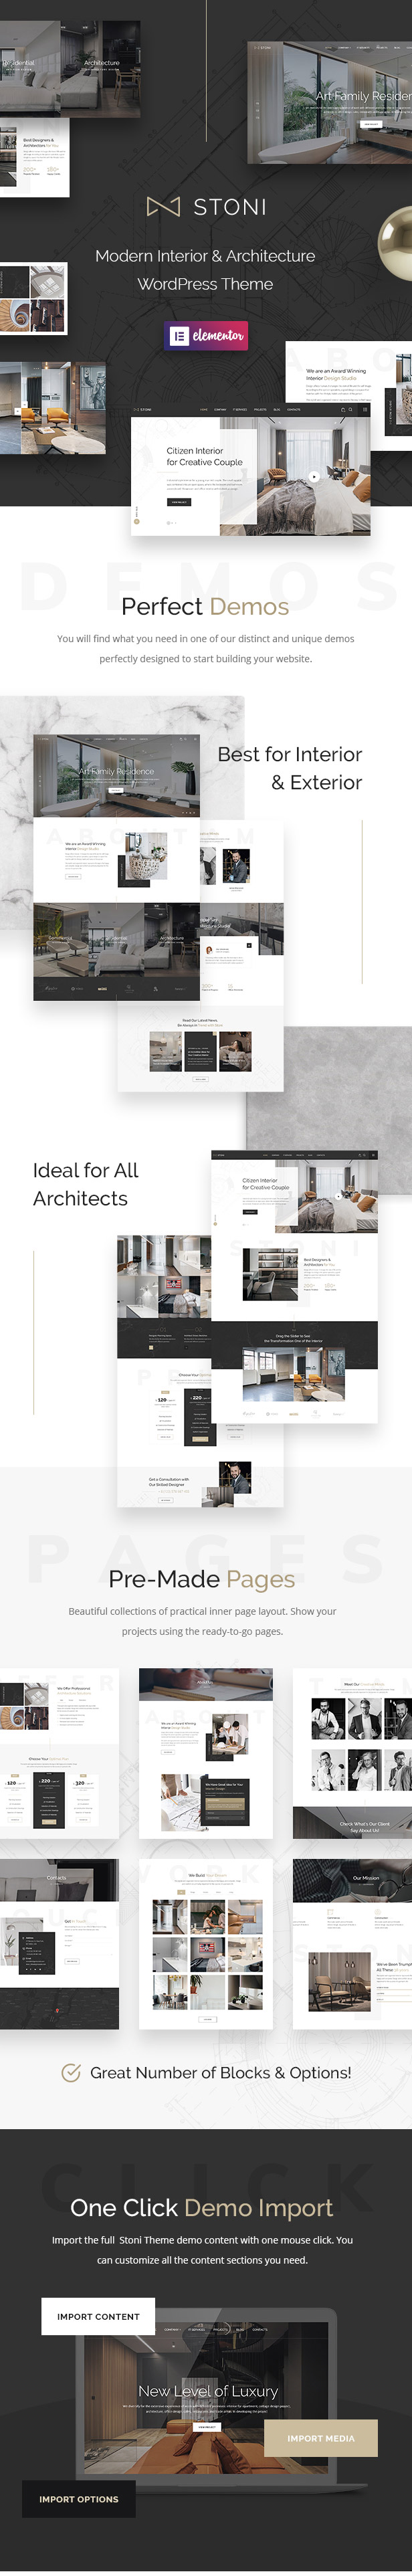 Stoni - Architecture Agency WordPress Theme - 1